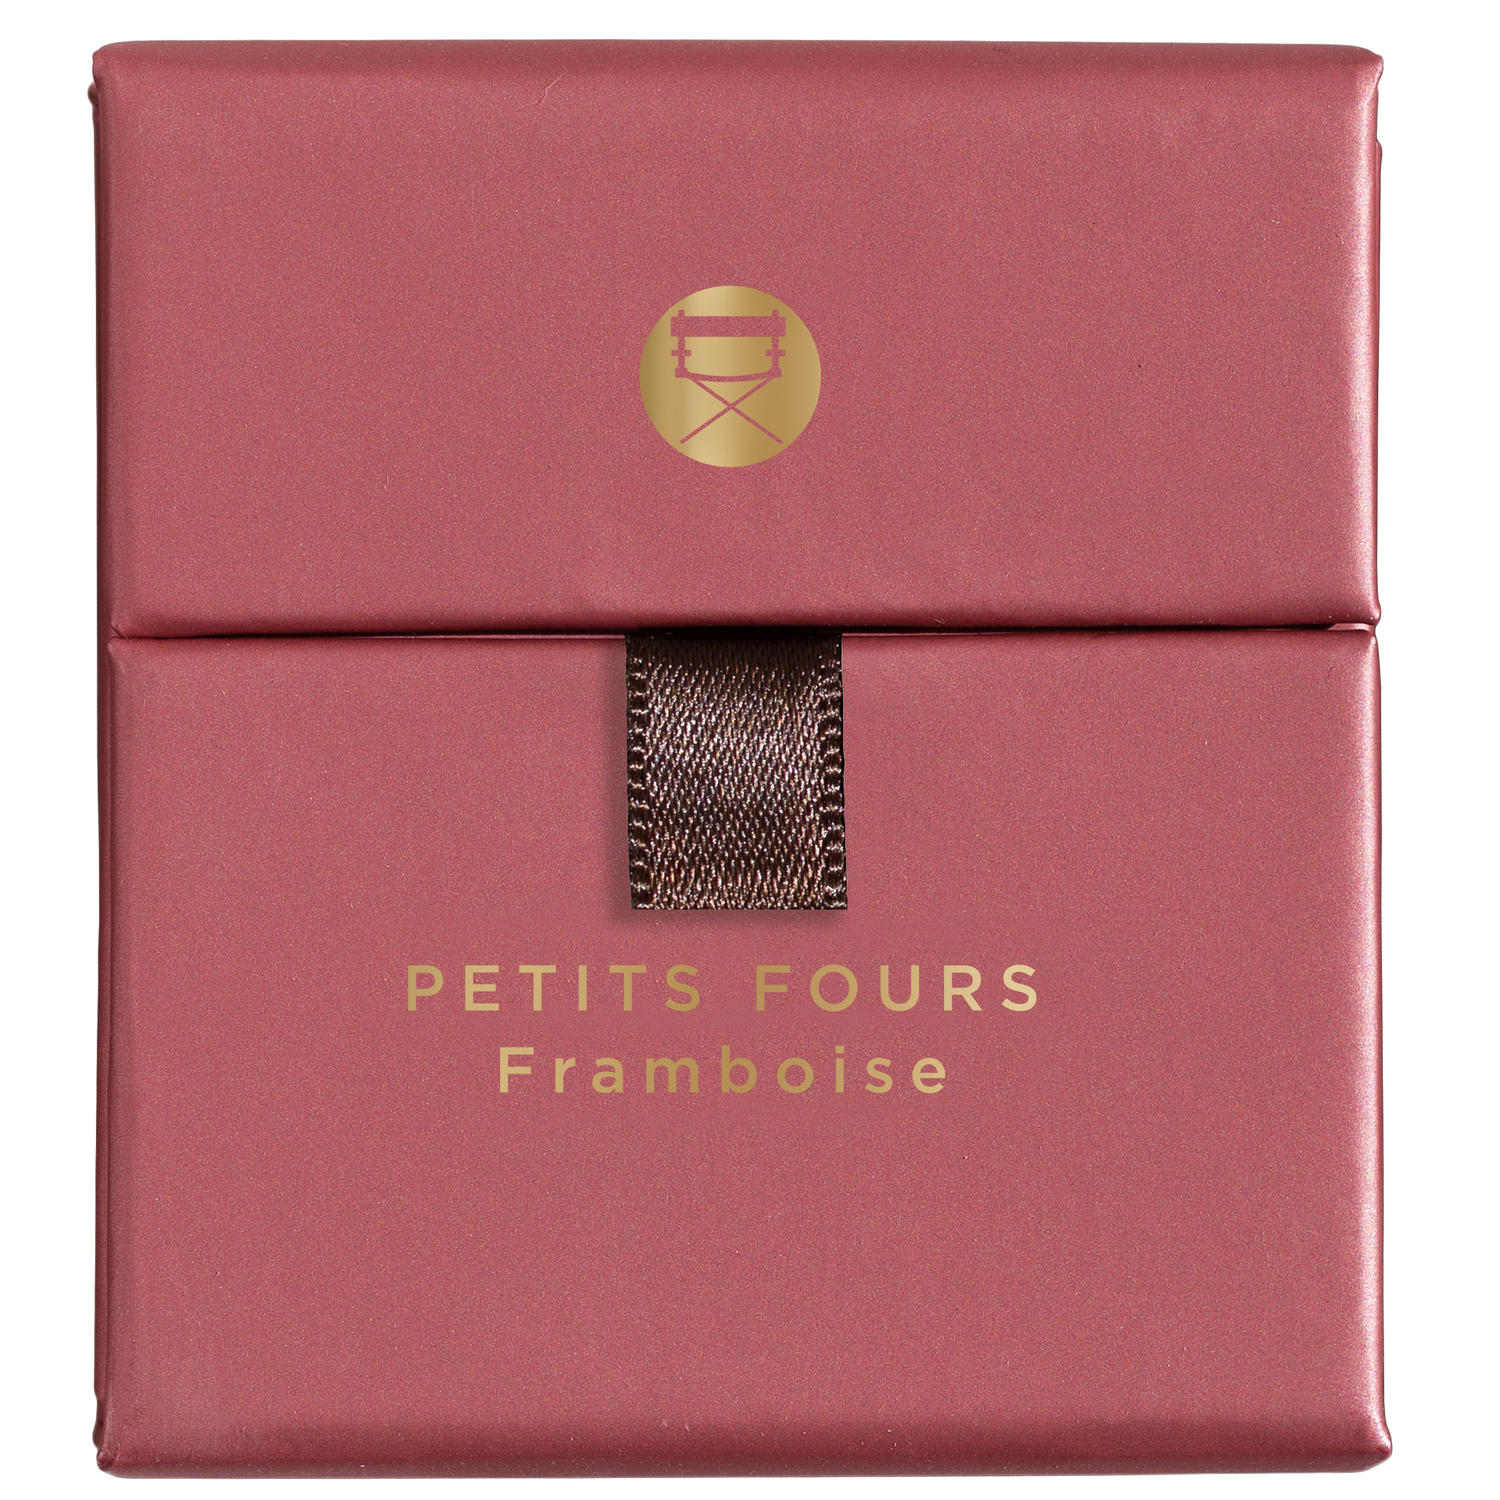 Viseart Paris Petits Fours Framboise Eyeshadow Palette Case